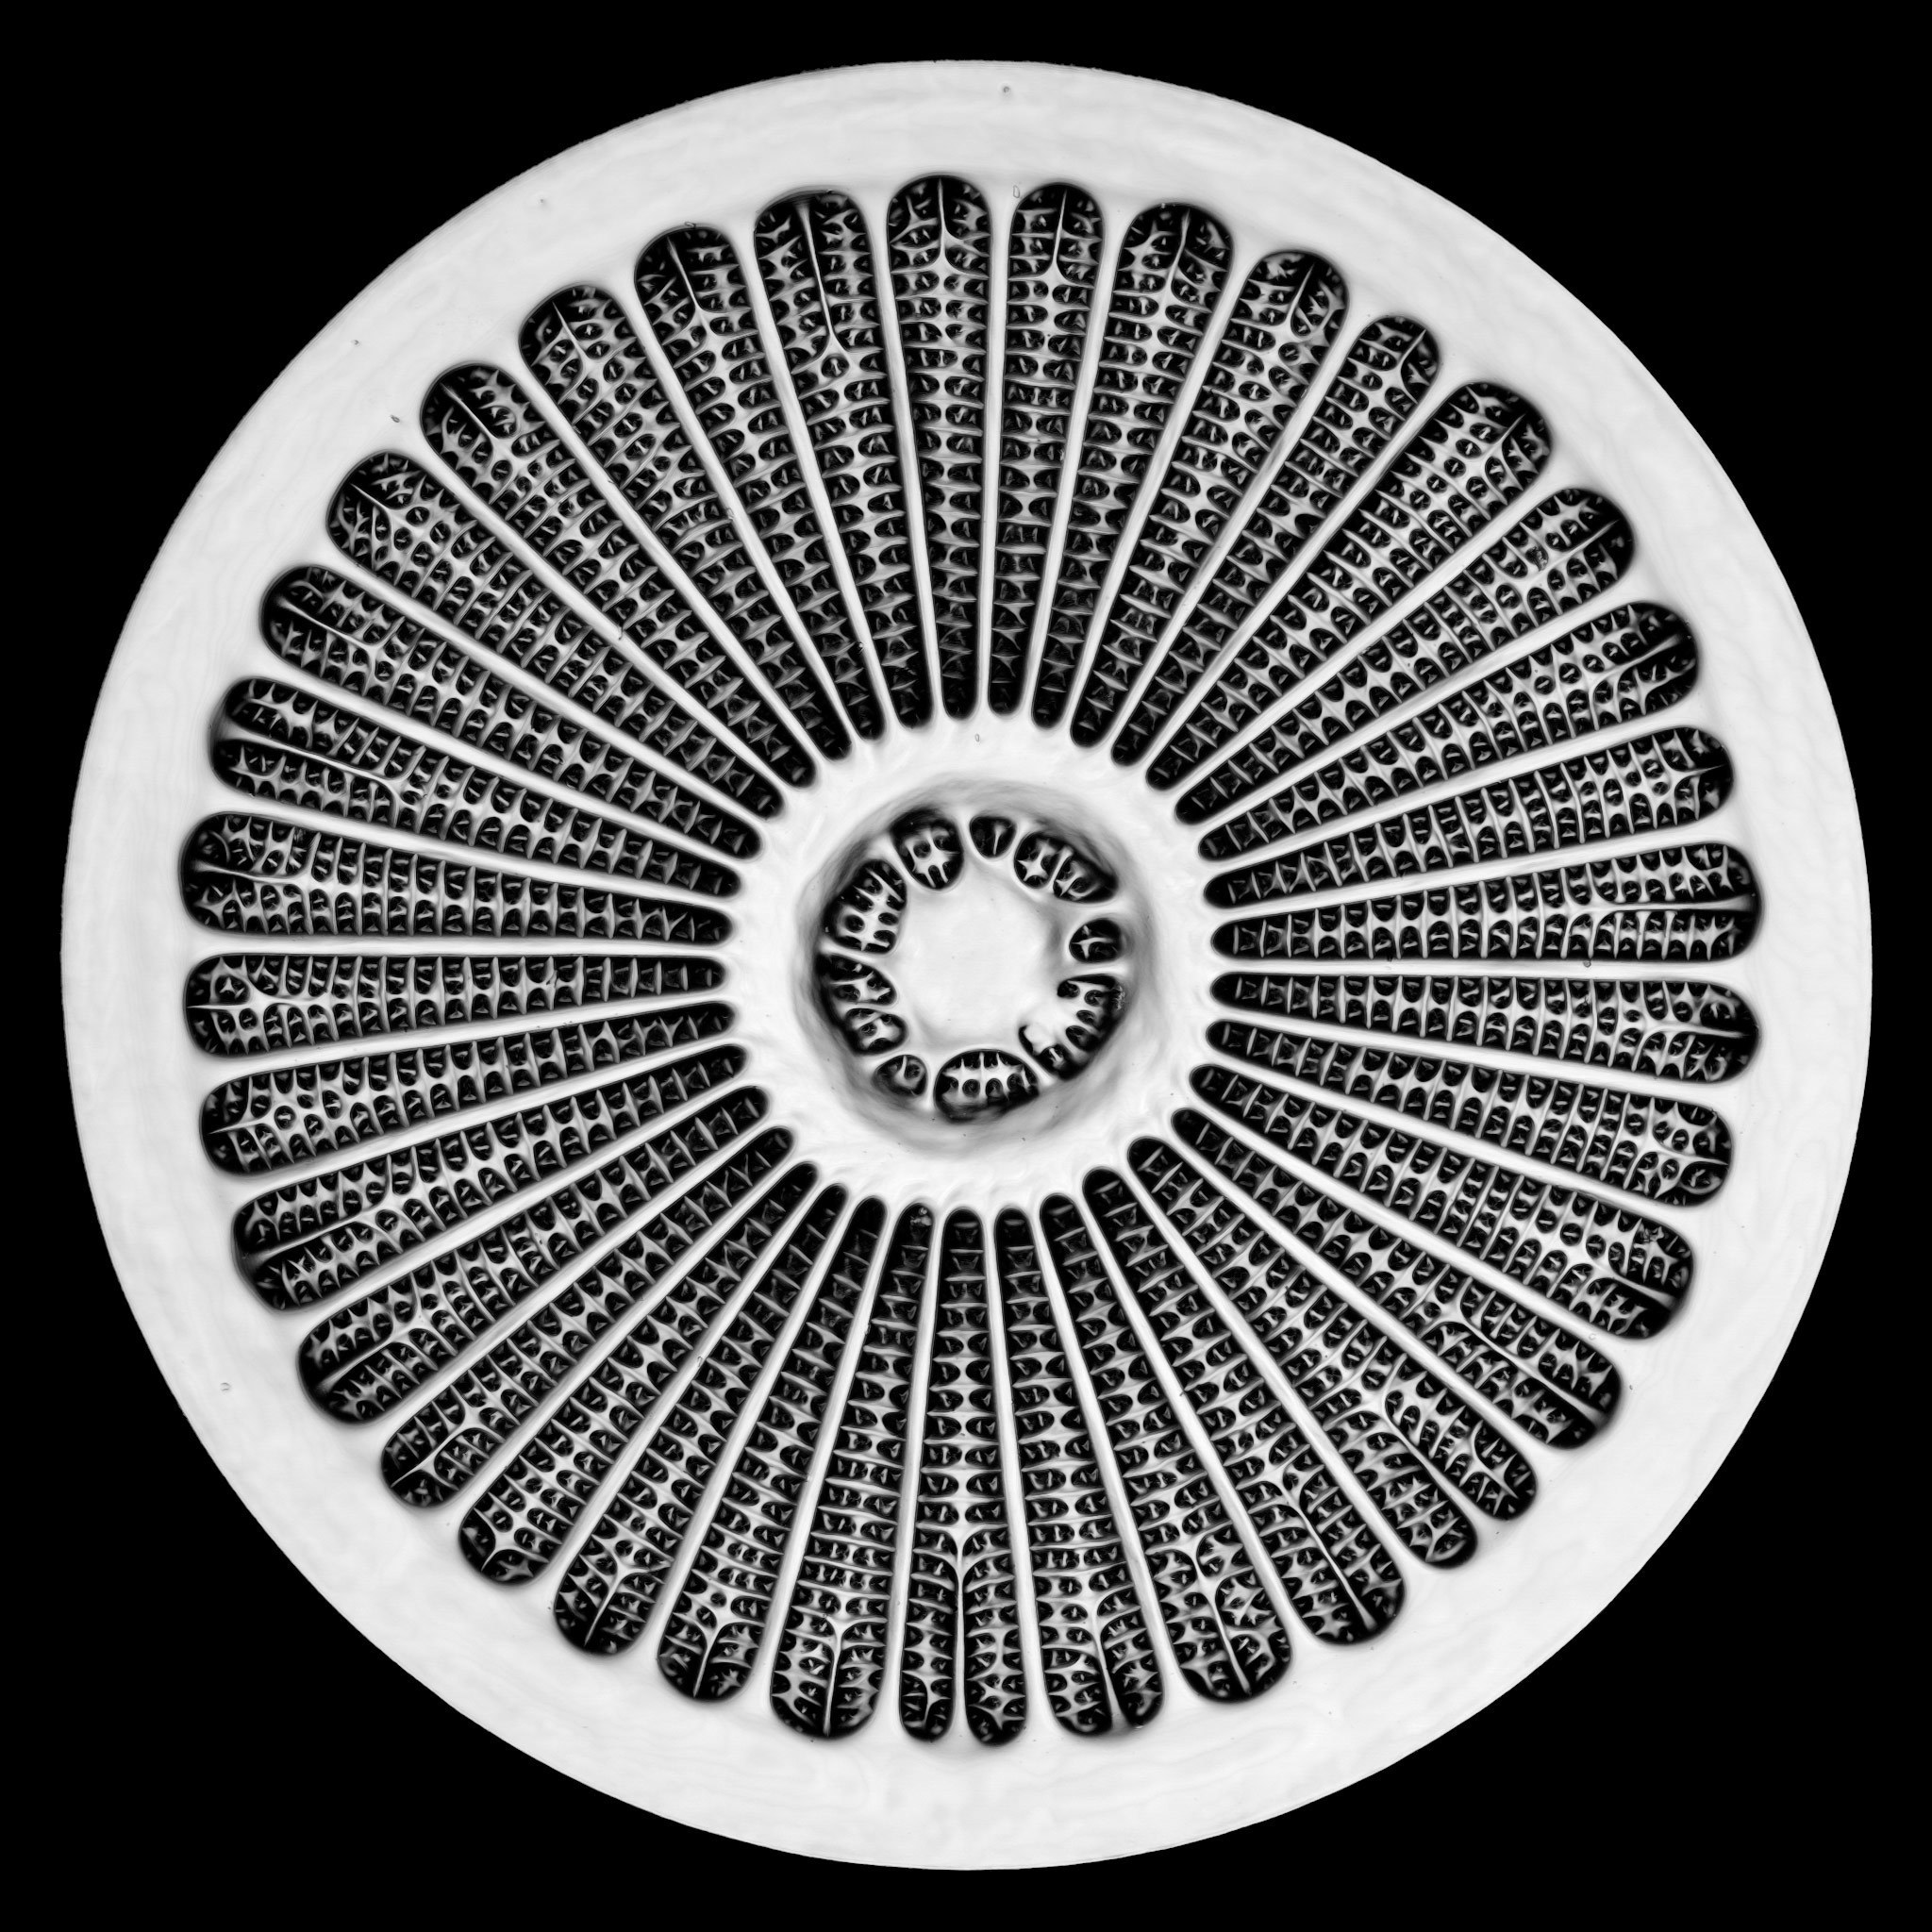 2020 nikon photomicrography competition winners - Silica cell wall of the marine diatom Arachnoidiscus sp.